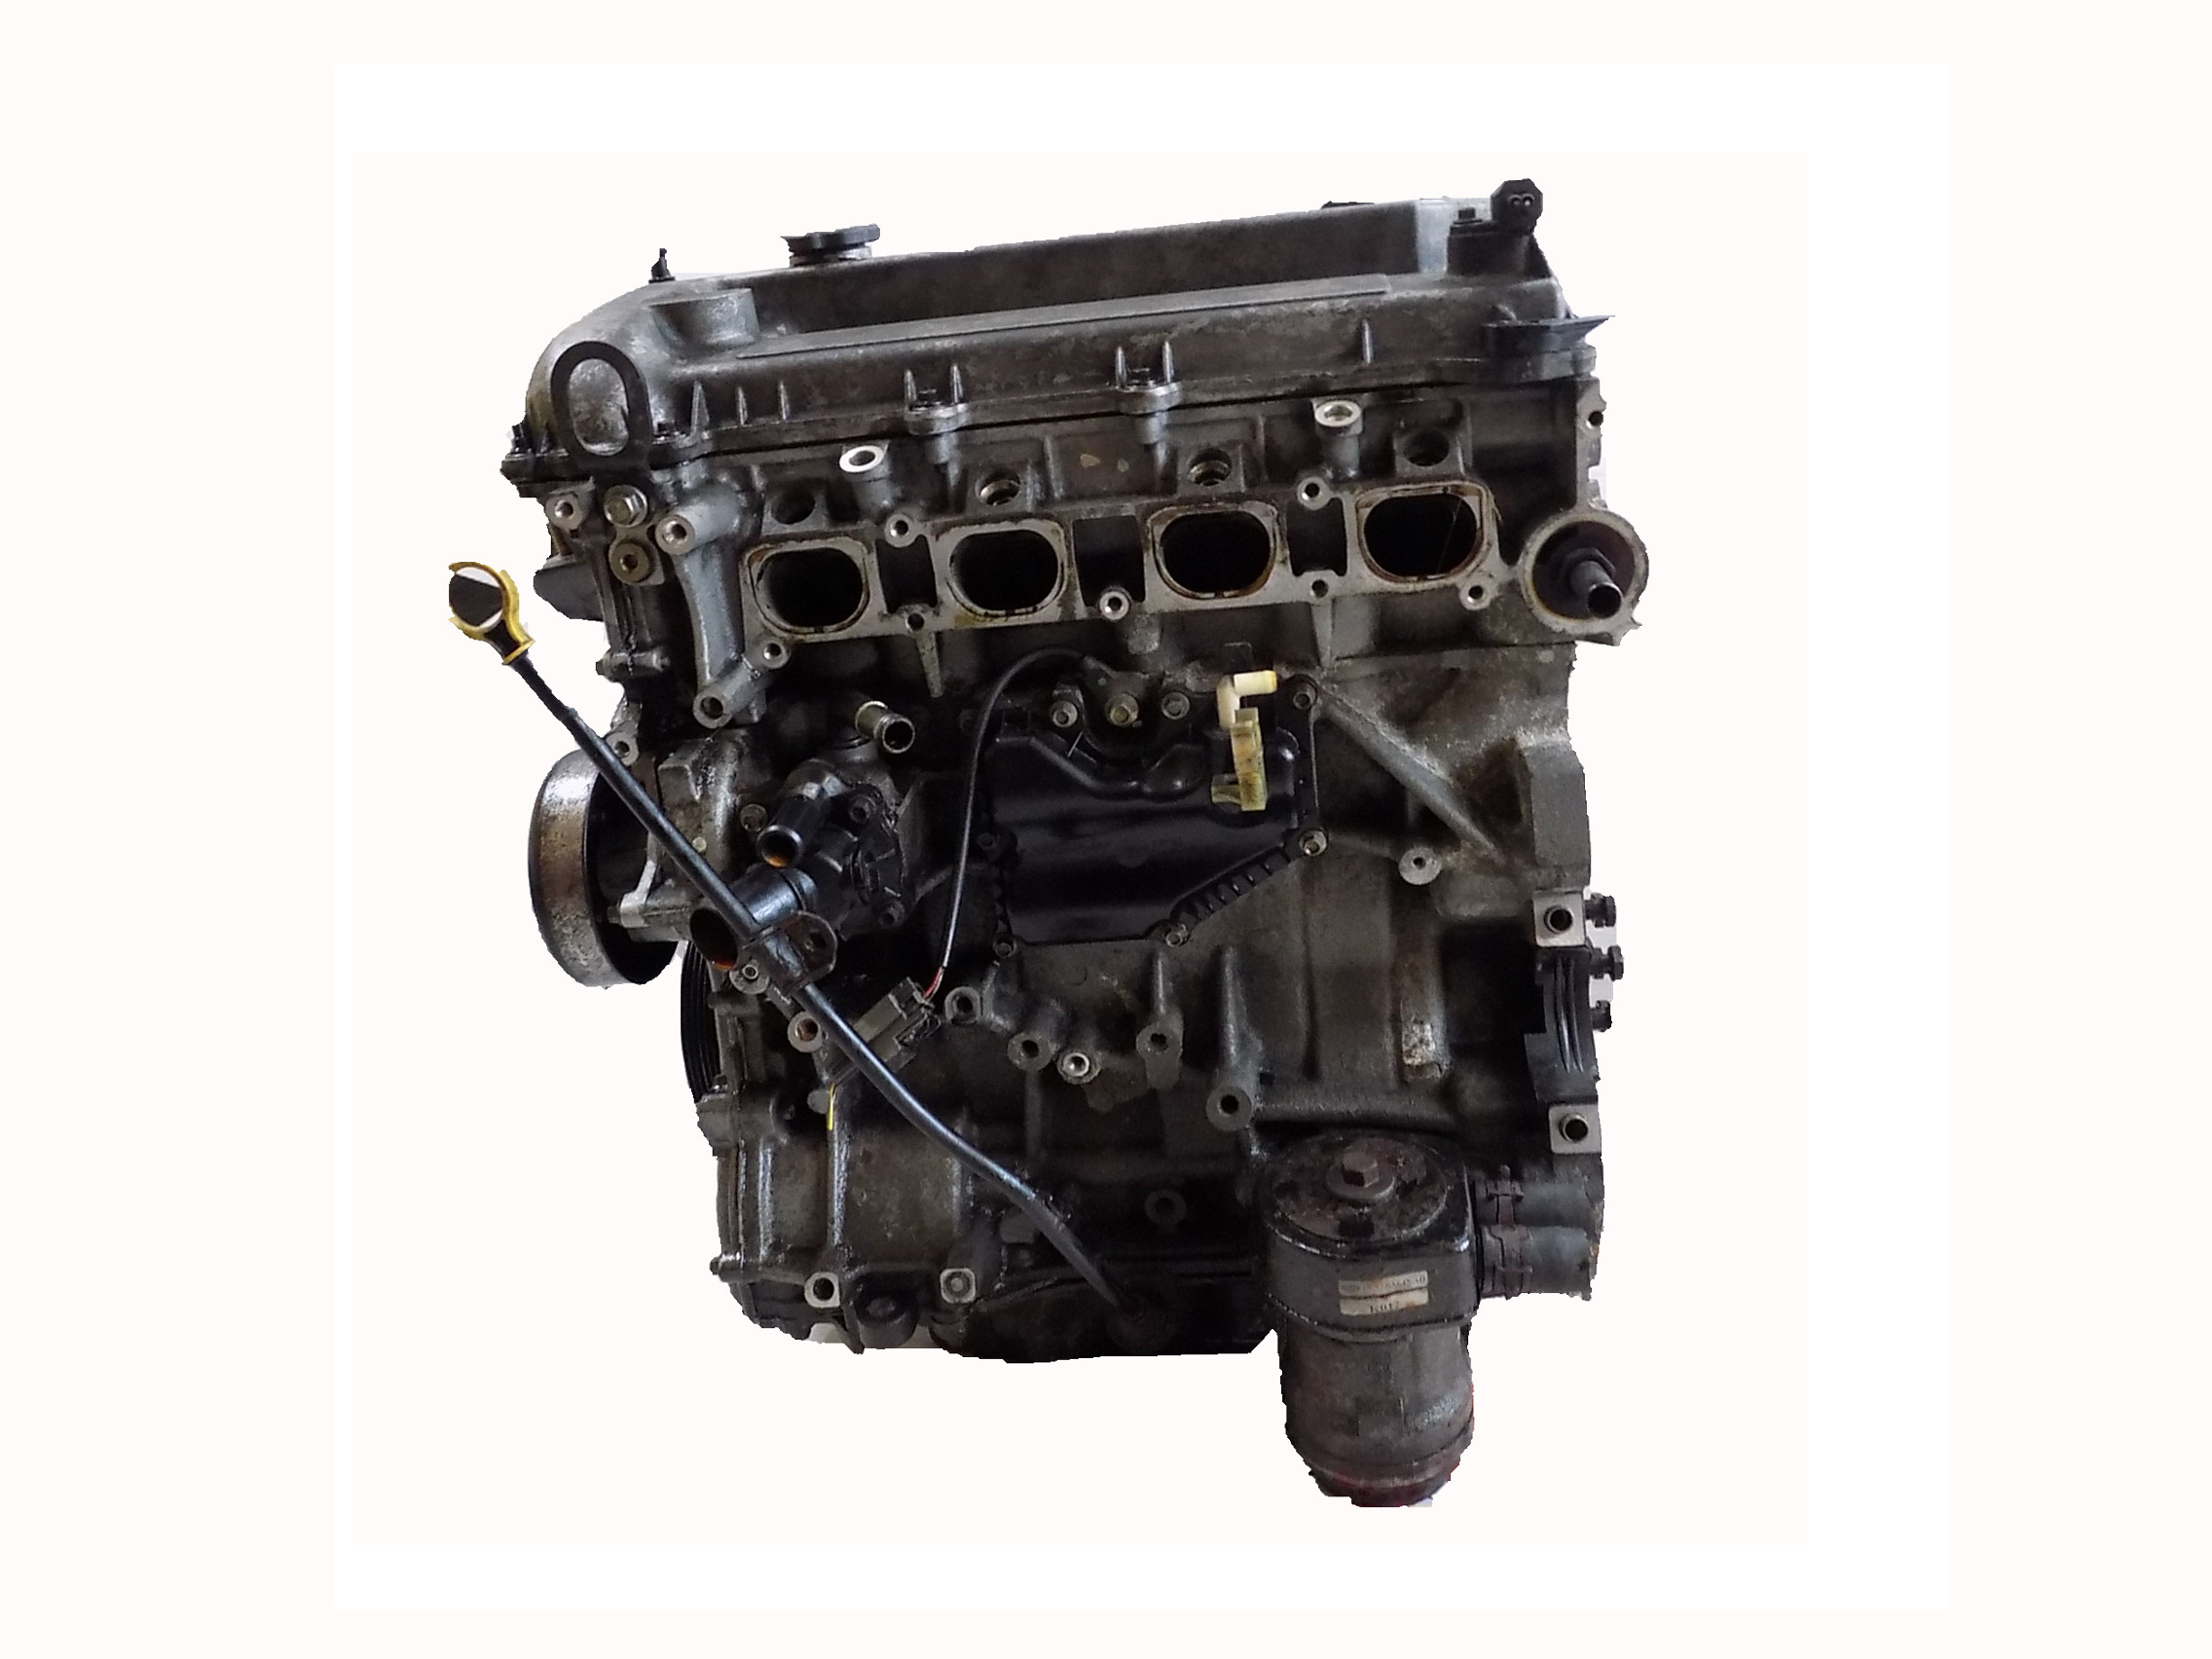 Teilweise Erneuert Motor Mazda 6 2 3 Motor L3c1 02 06 122kw 166ps Euro 3 Ebay